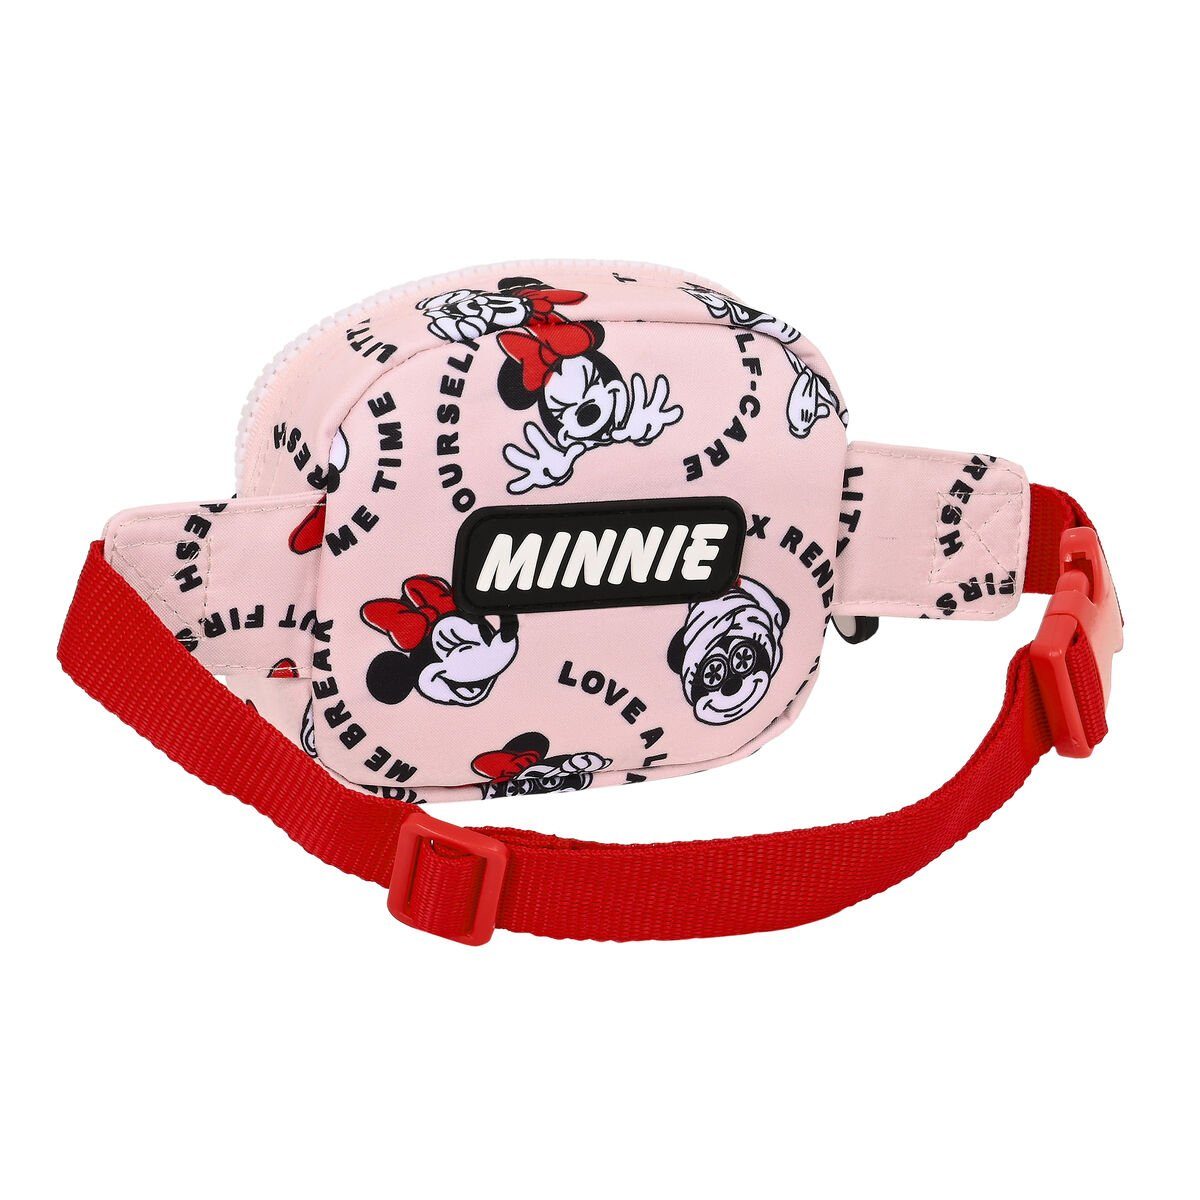 x 11 Minnie cm Rosa 4 Minnie time Handtasche Gürteltasche Me 14 Mouse x Mouse Disney